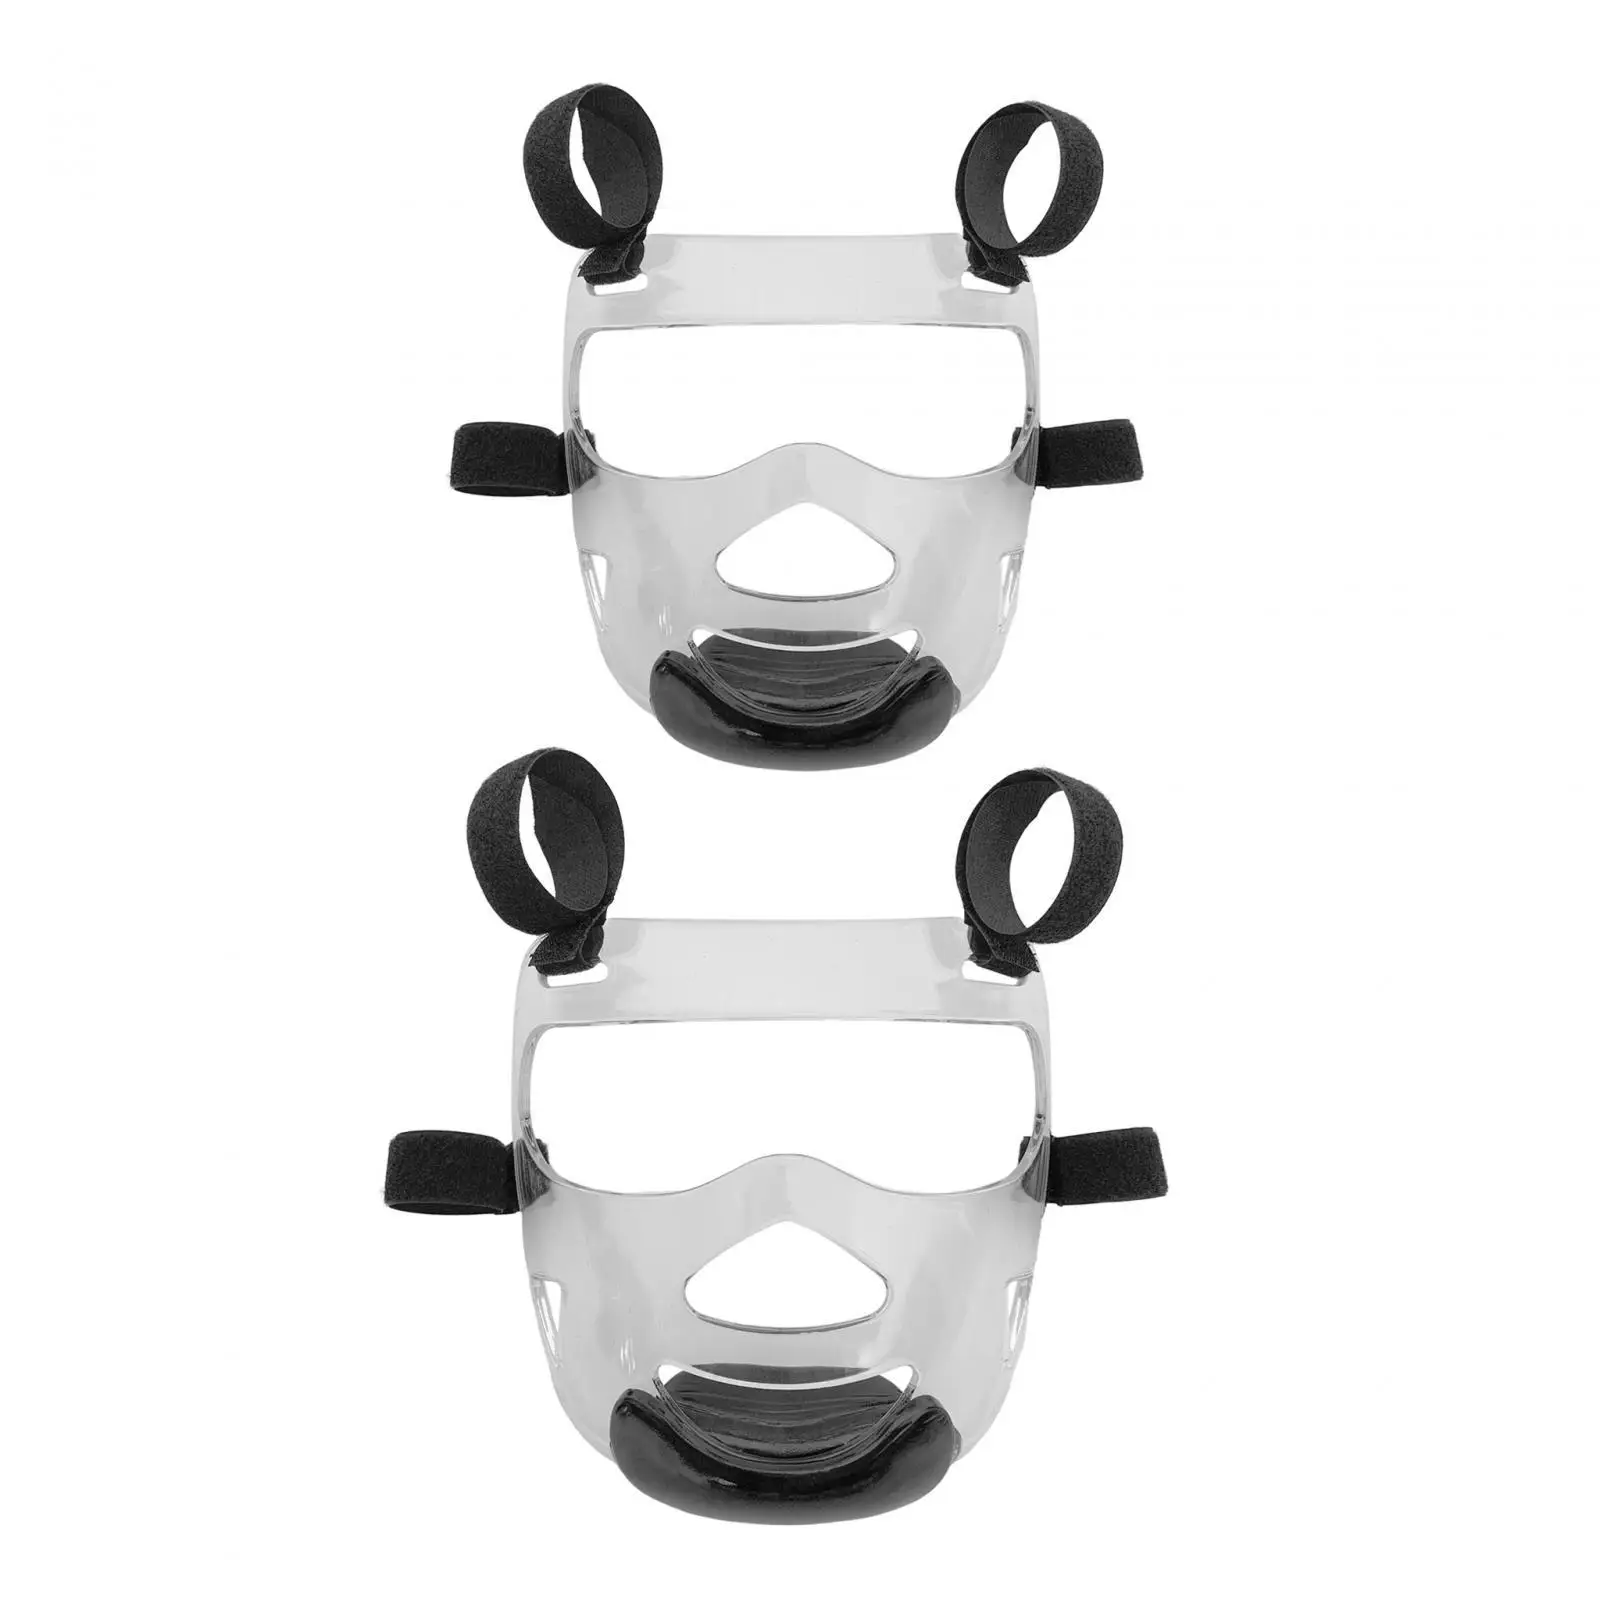 Taekwondo Mask Taekwondo Face Shield Detachable Protective Boxing Headgear Face Guard for Sparring Boxing Sanda Martial Arts